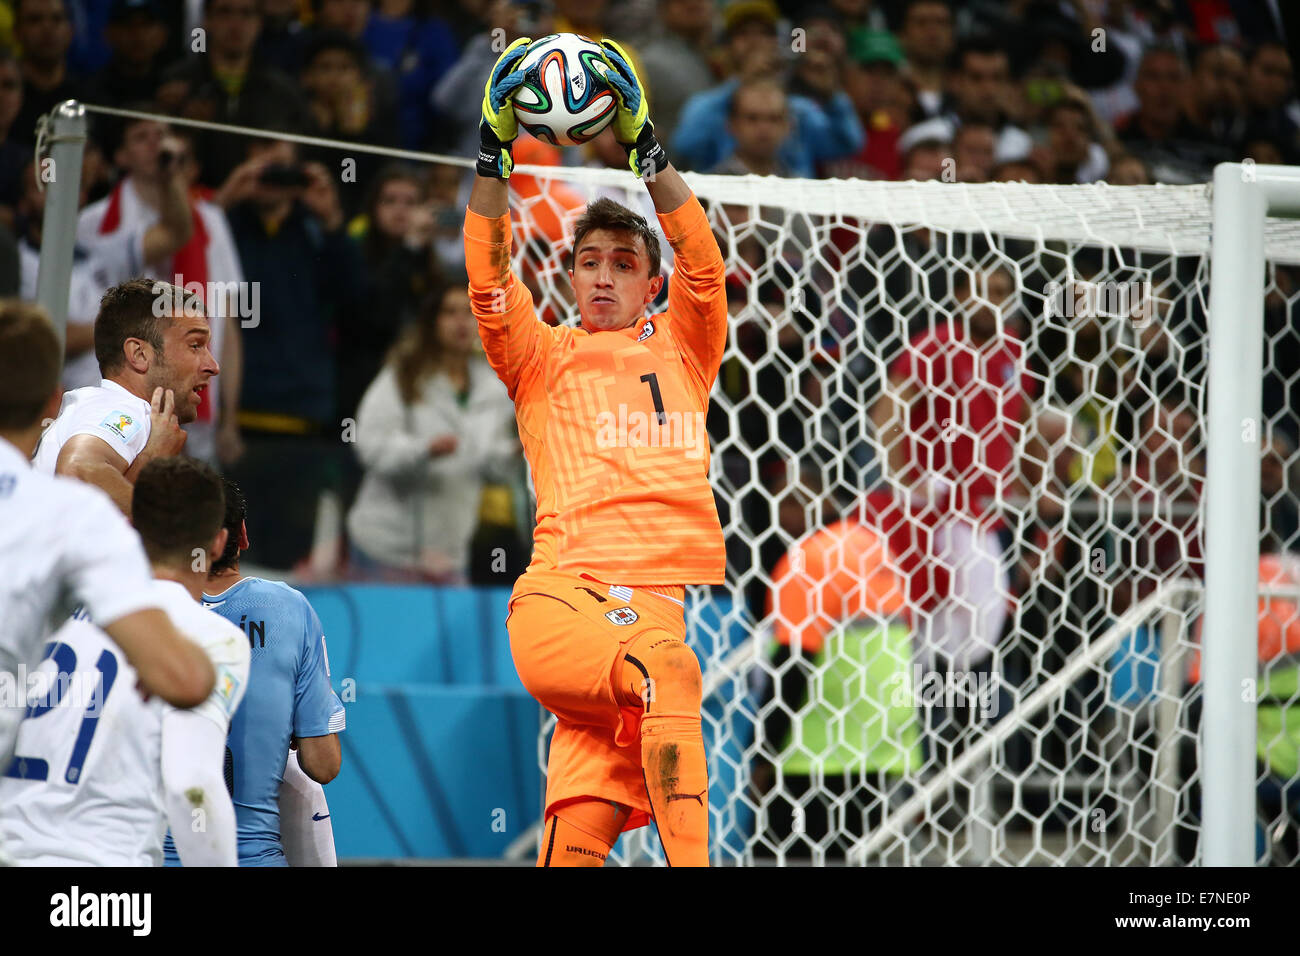 Fernando Muslera. Uruguay v England, group match. FIFA World Cup 2014. Arena de Sao Paulo, Sao Paulo. 19 Jun 2014 Stock Photo